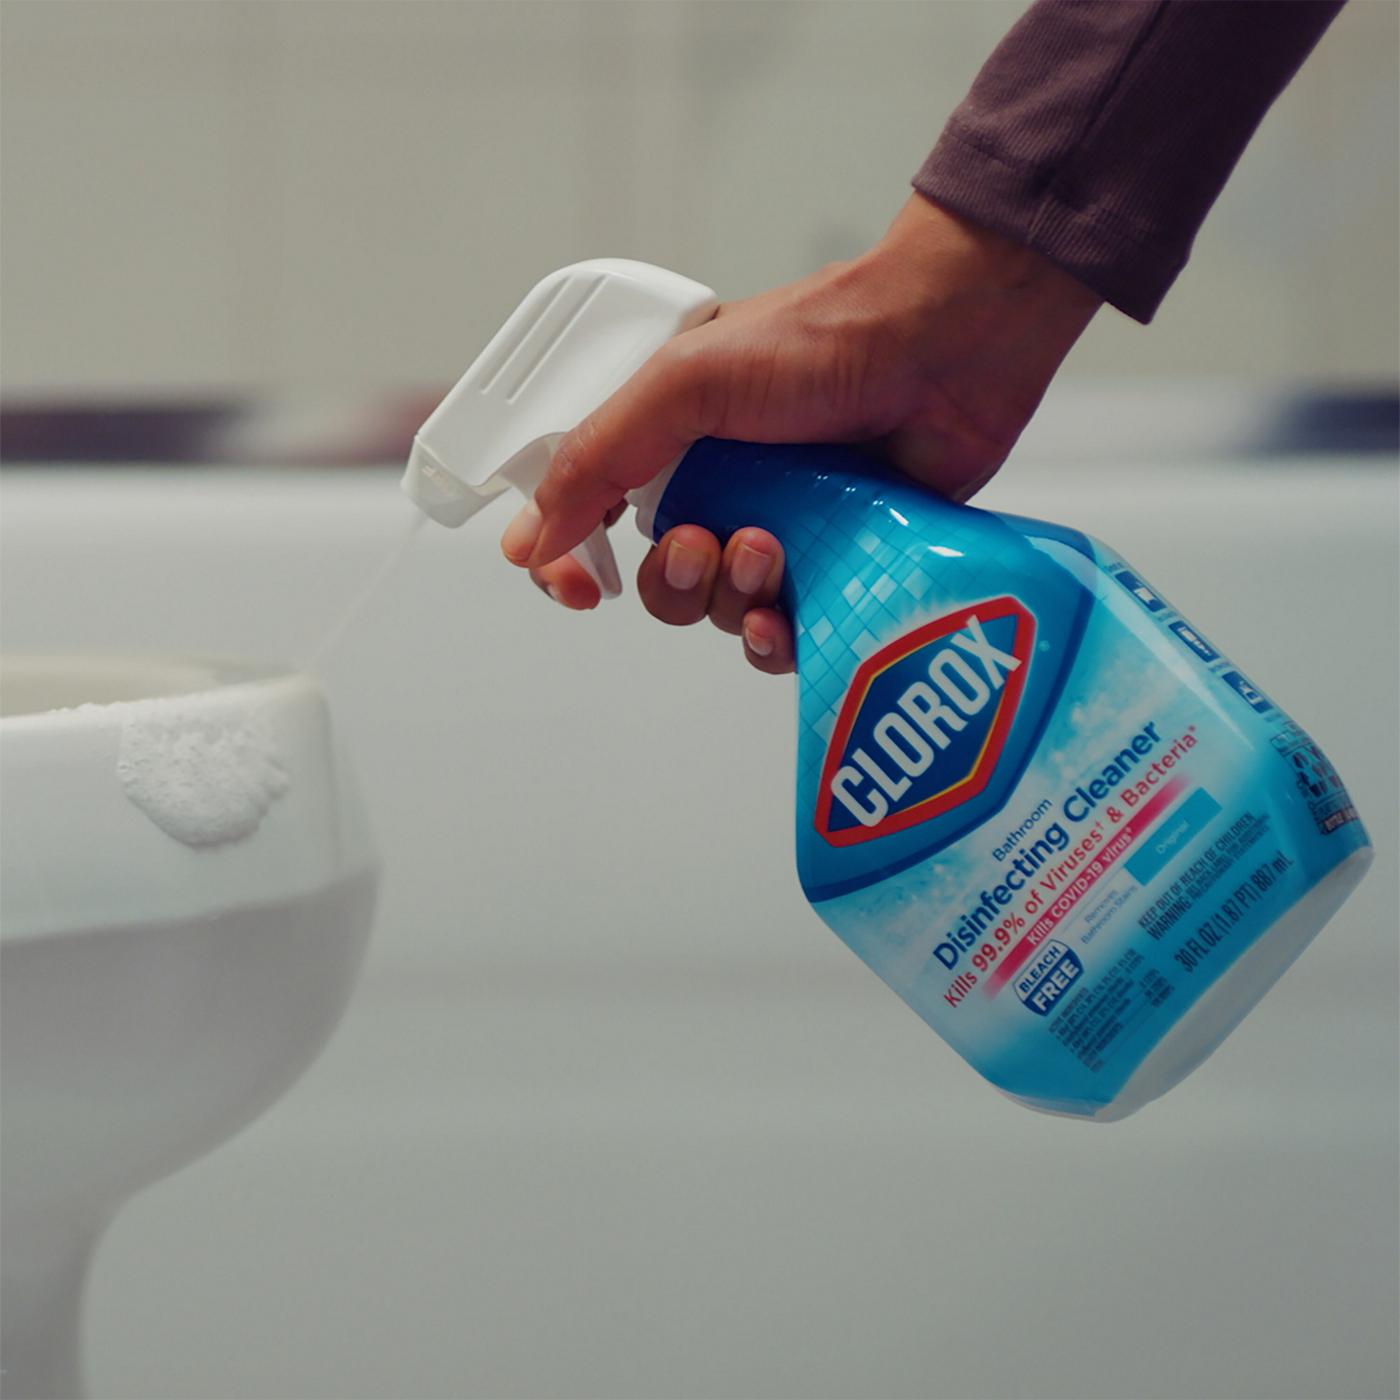 Clorox Disinfecting Bathroom Cleaner Spray; image 6 of 7